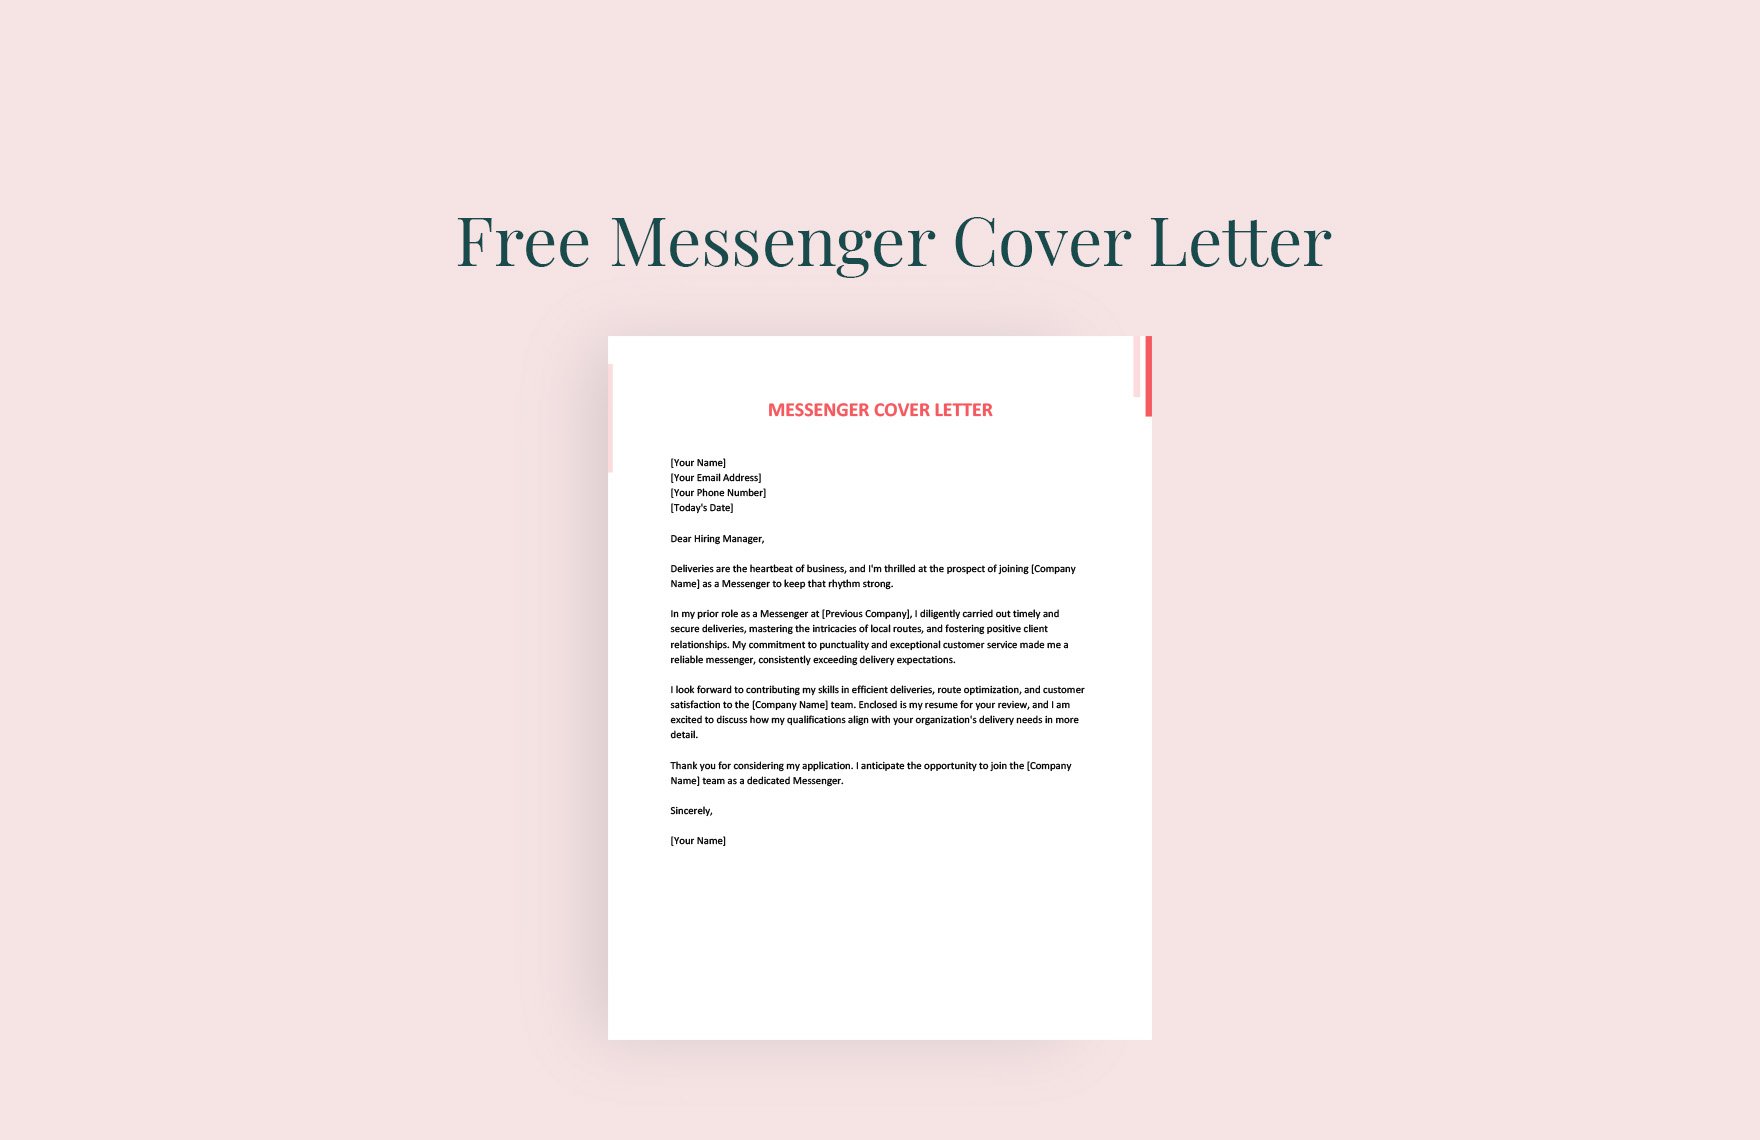 Messenger Cover Letter in Word, Google Docs